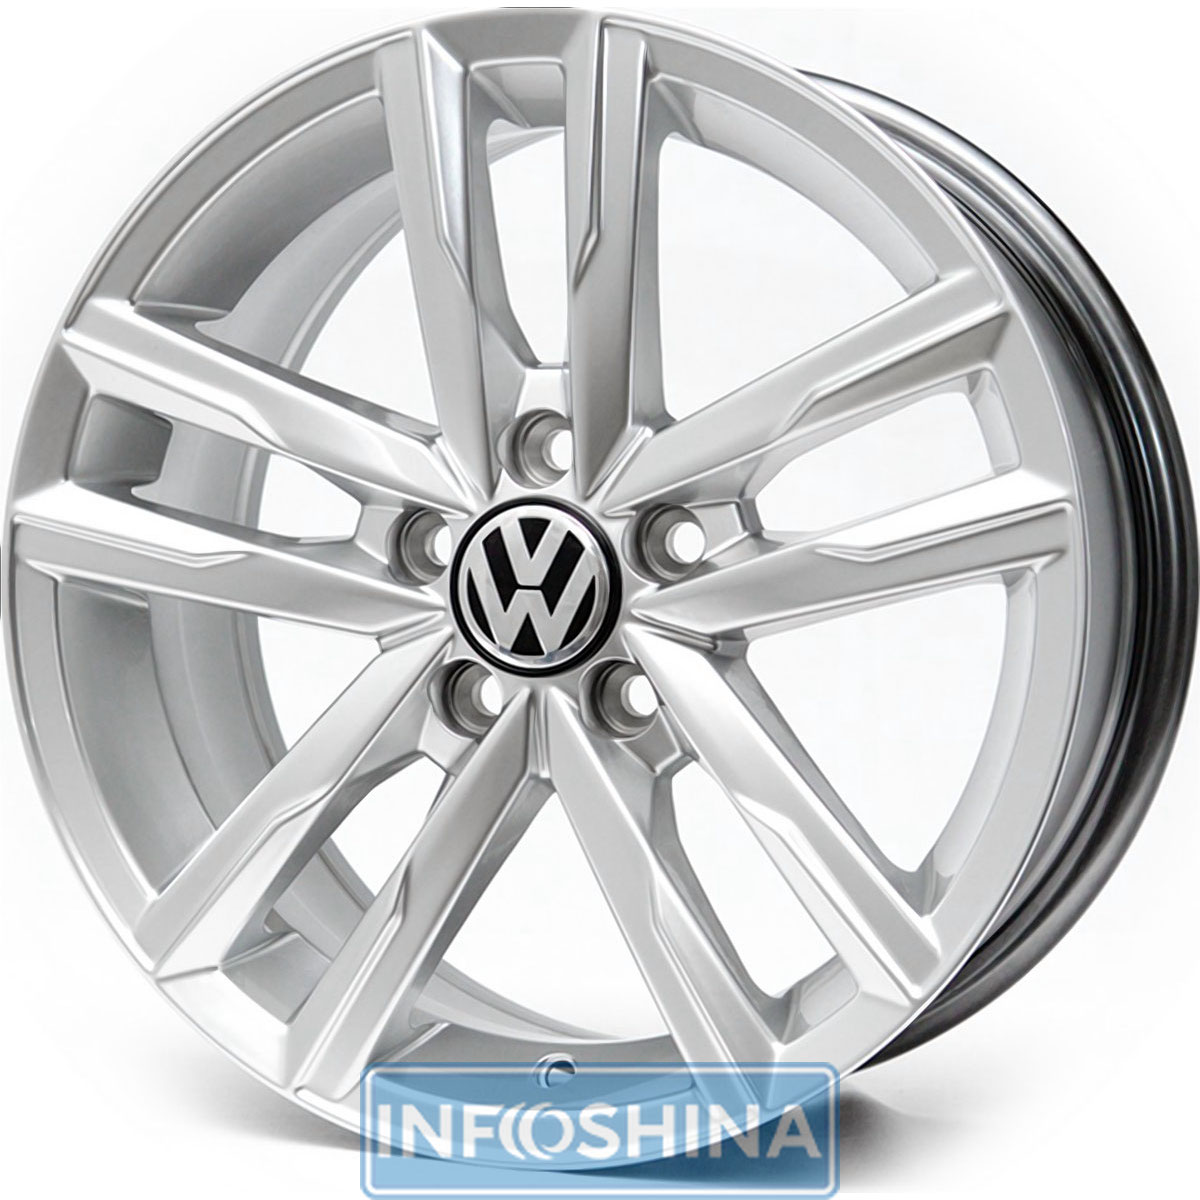 Купить диски Replica Volkswagen RX527 HS R15 W6.5 PCD5x100 ET35 DIA57.1